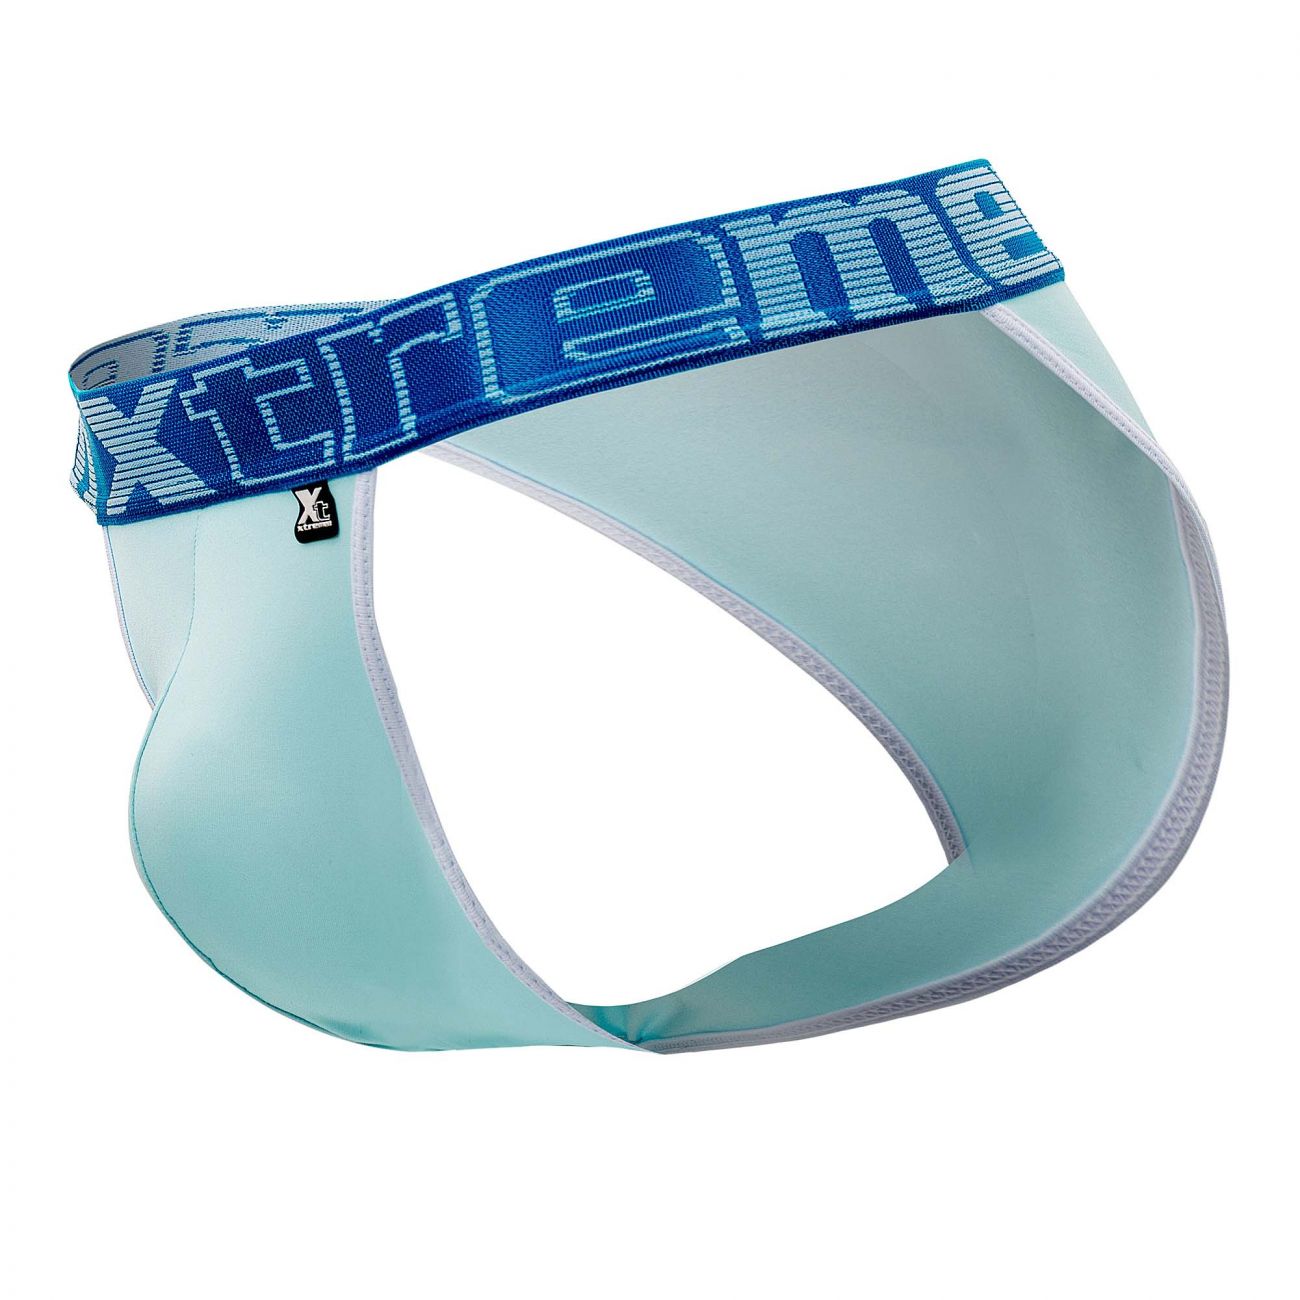 Xtremen 91057X Big Pouch Bikini